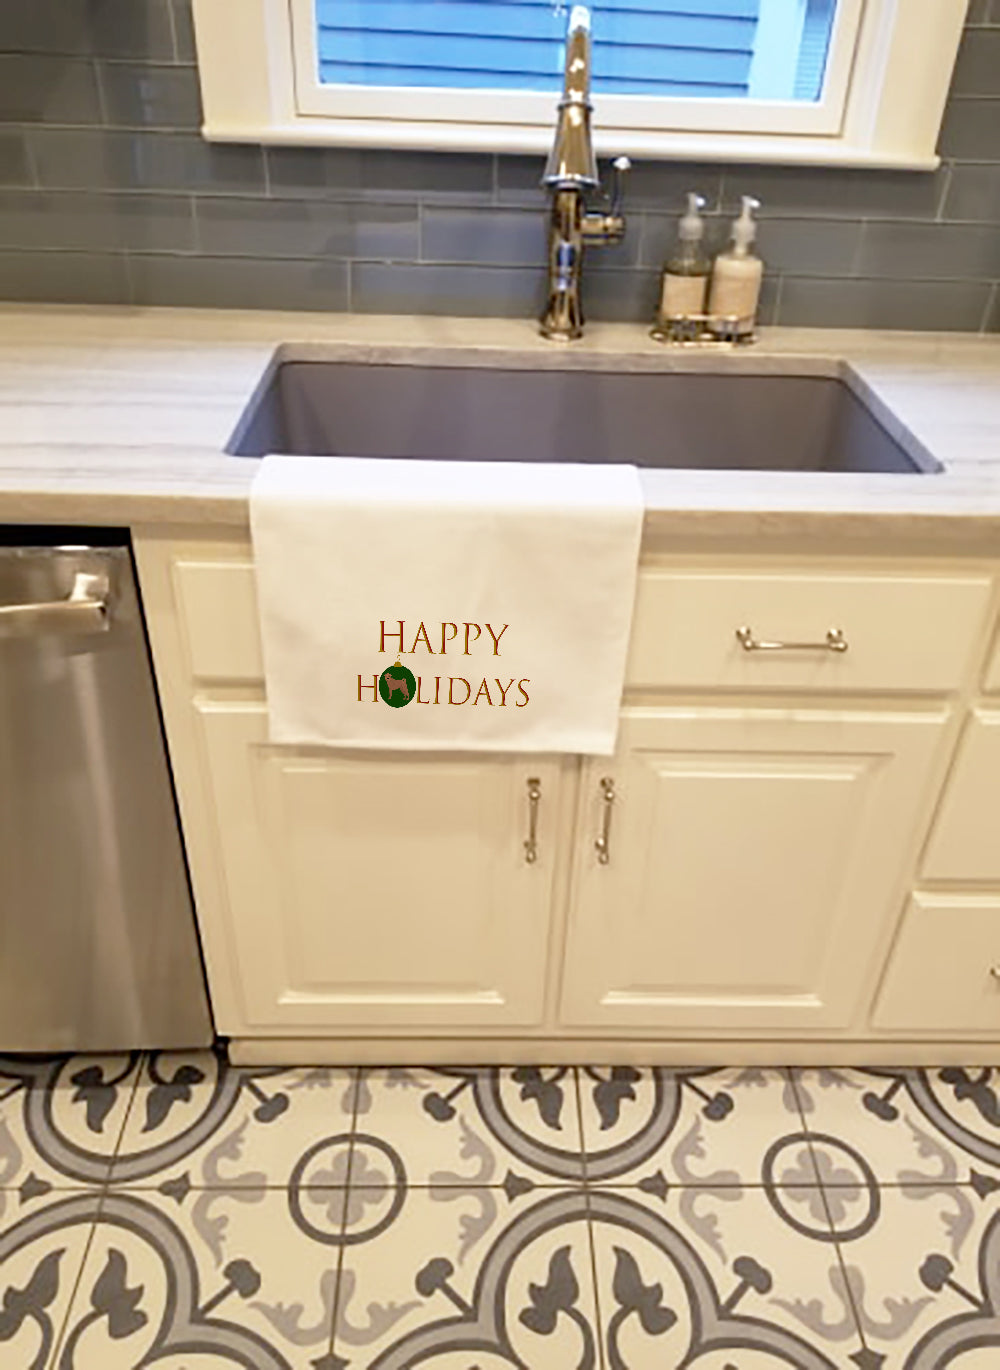 Buy this Shar Pei #2 Happy Holidays White Kitchen Towel Set of 2